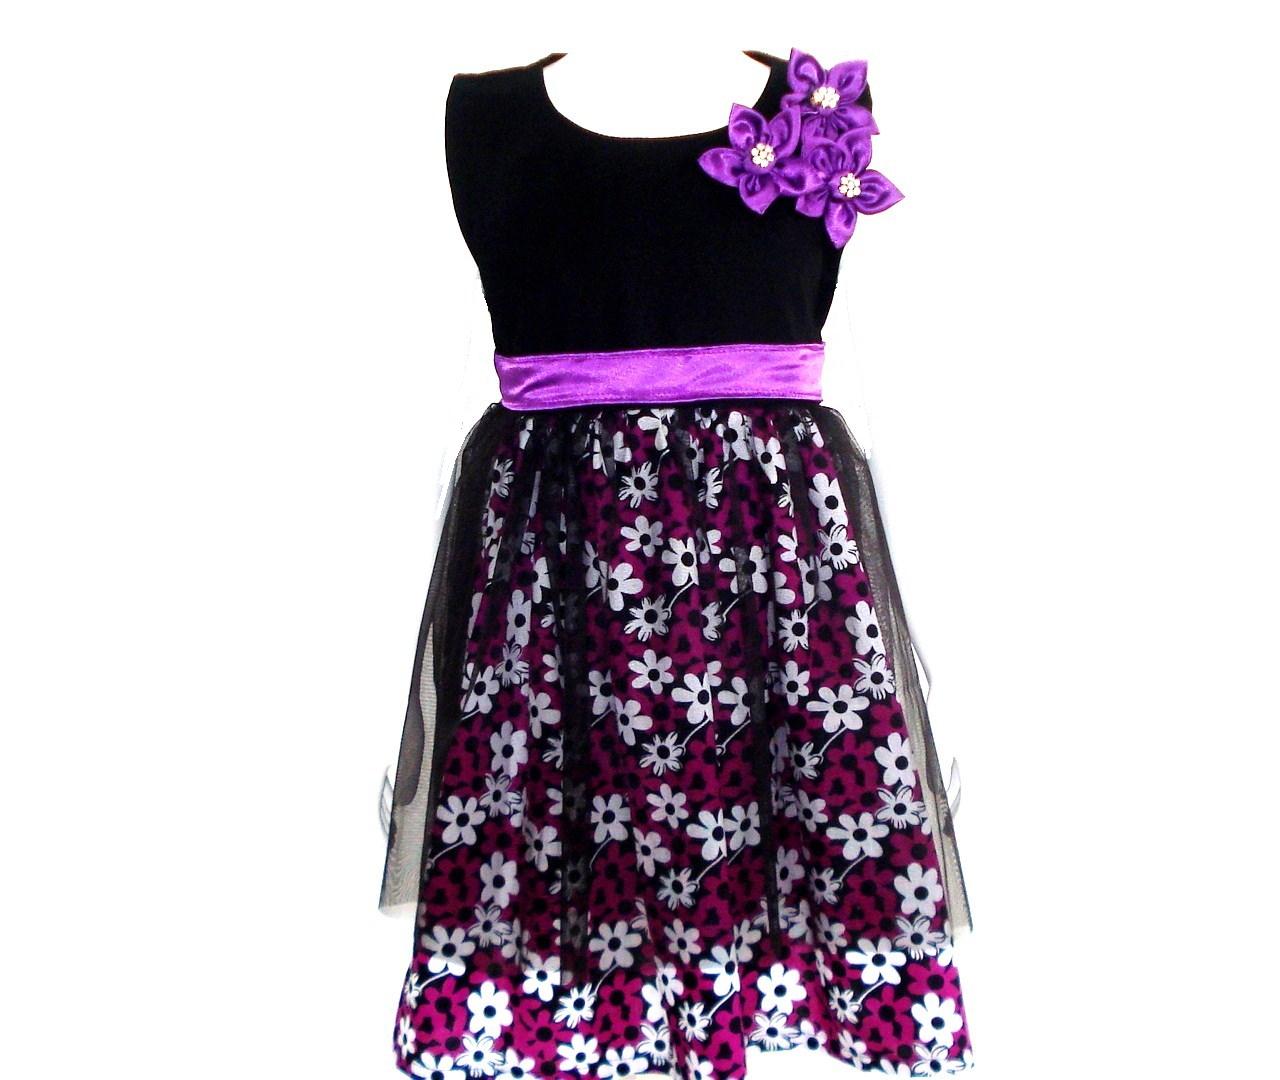 flower girl dress sewing patterns | eBay - Electronics, Cars